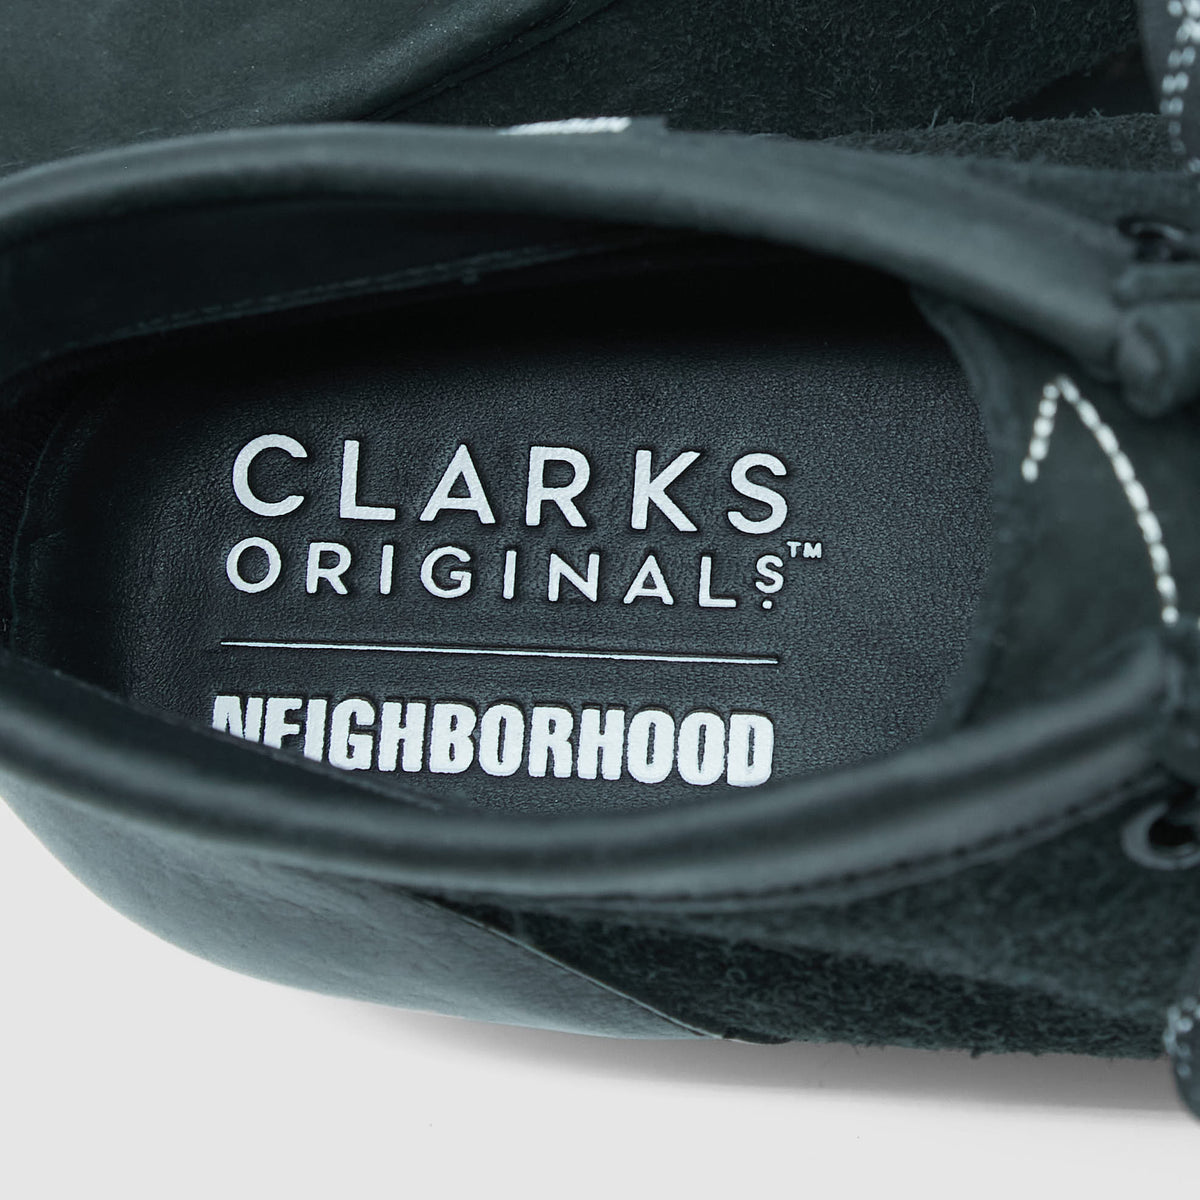 Clarks Originals x Neighborhood Wallabee High Boot